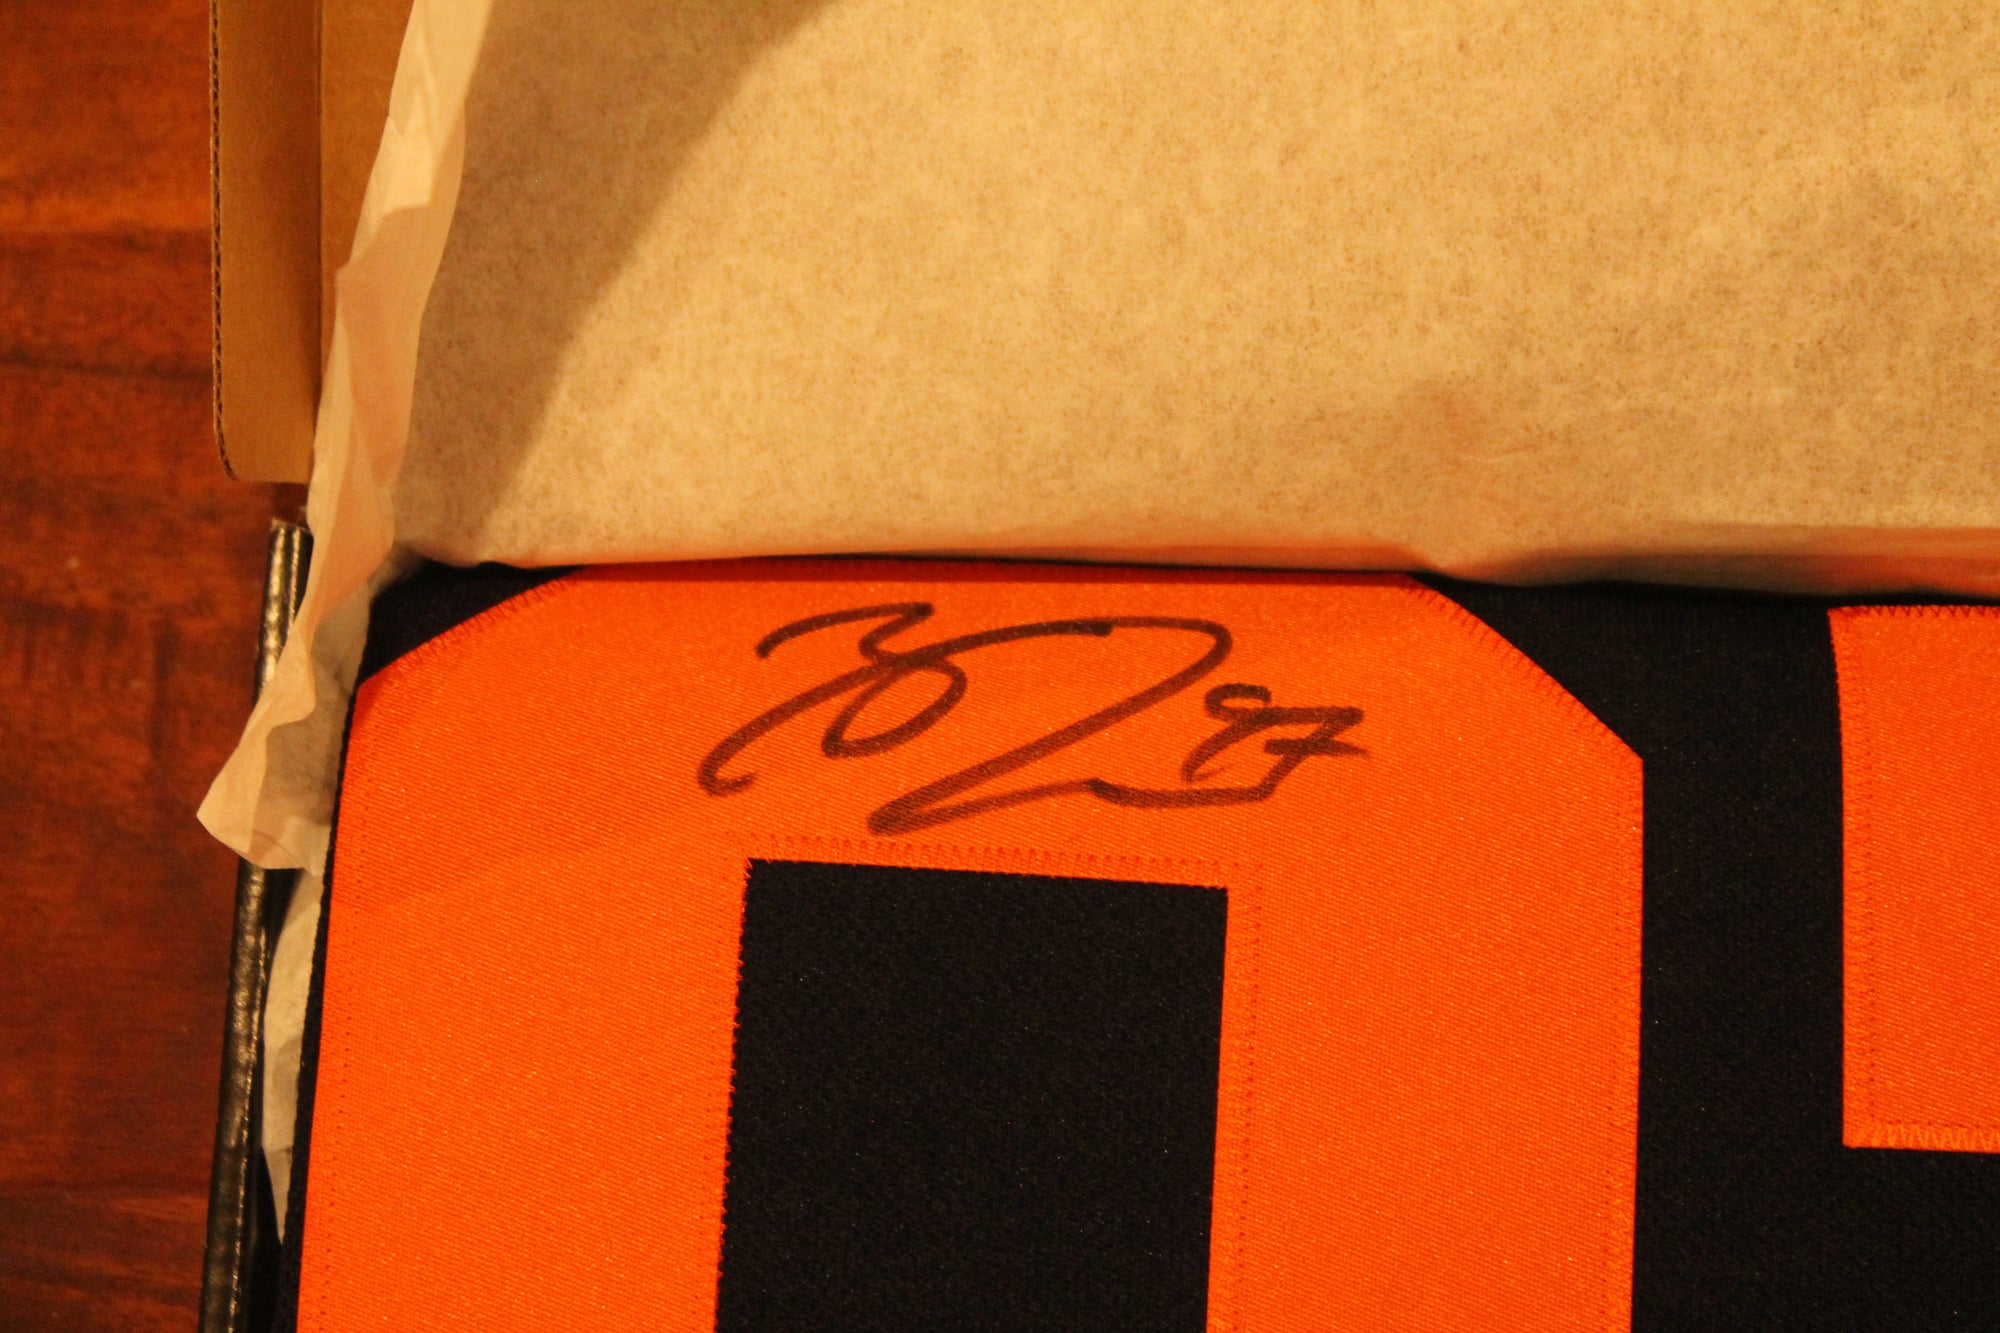 Connor McDavid Autographed & Inscribed Authentic Navy Adidas Edmonton  Oilers Alternate Jersey